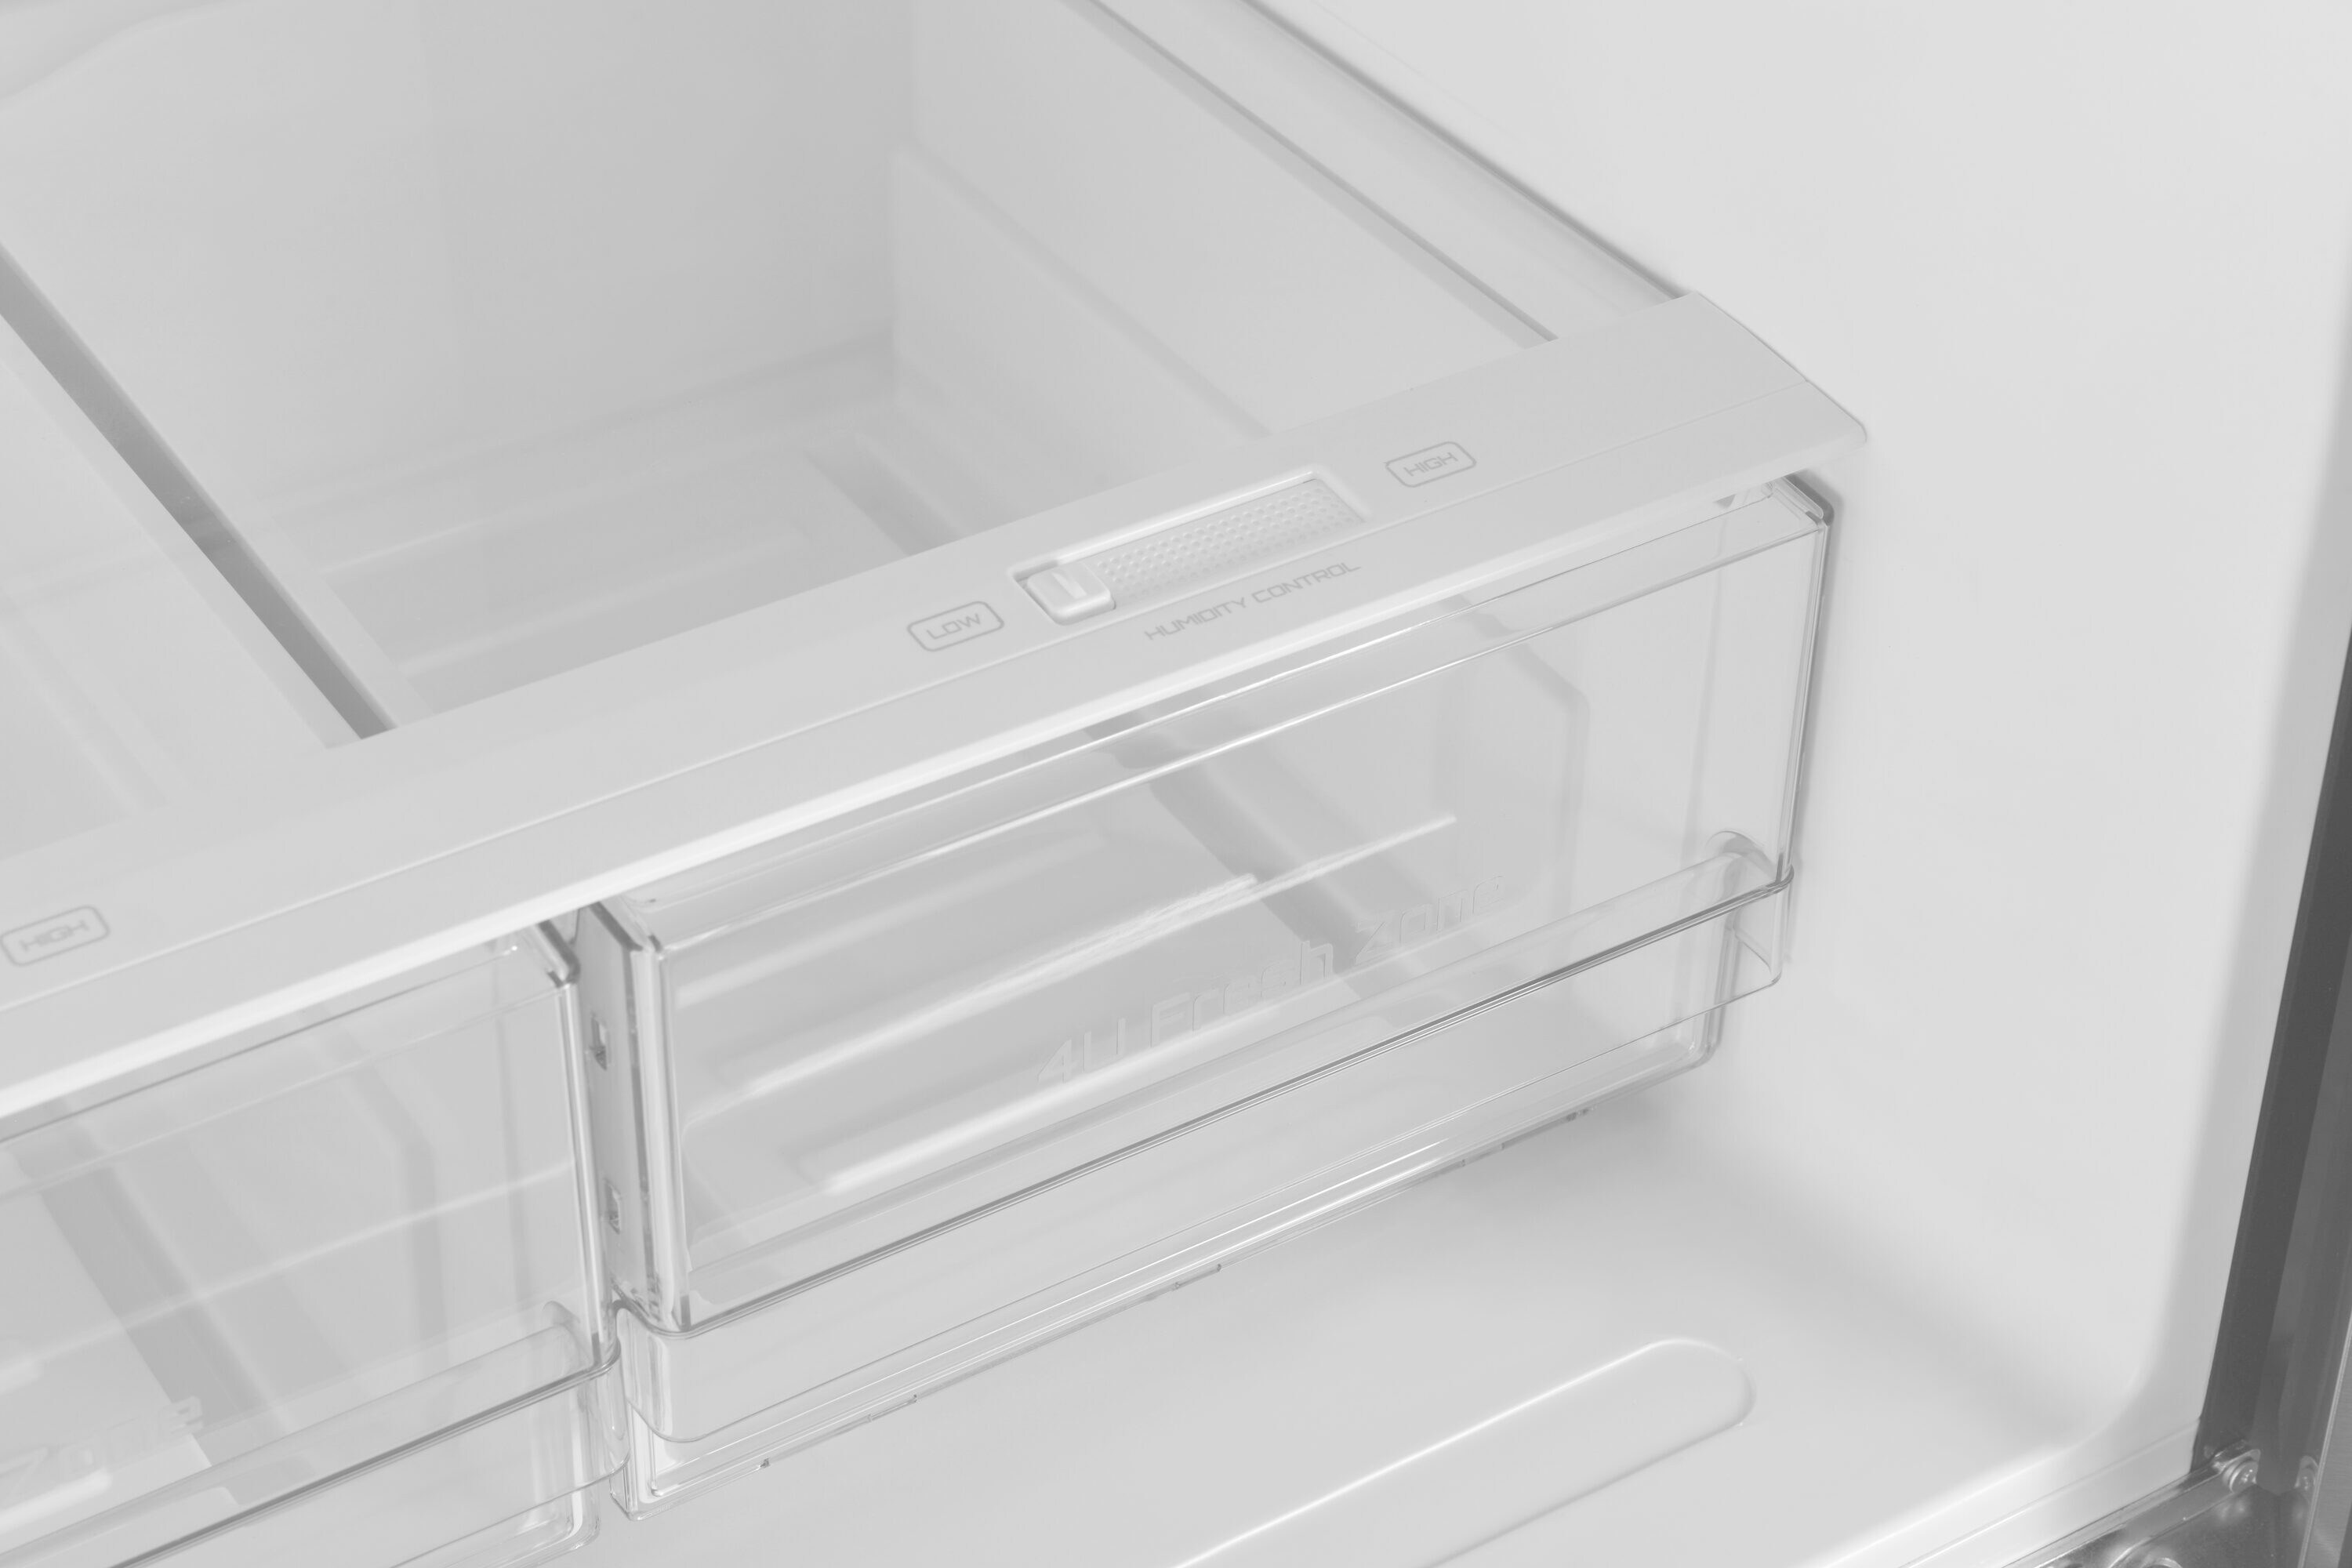 Galanz 18-cu ft Counter-depth Built-In French Door Refrigerator